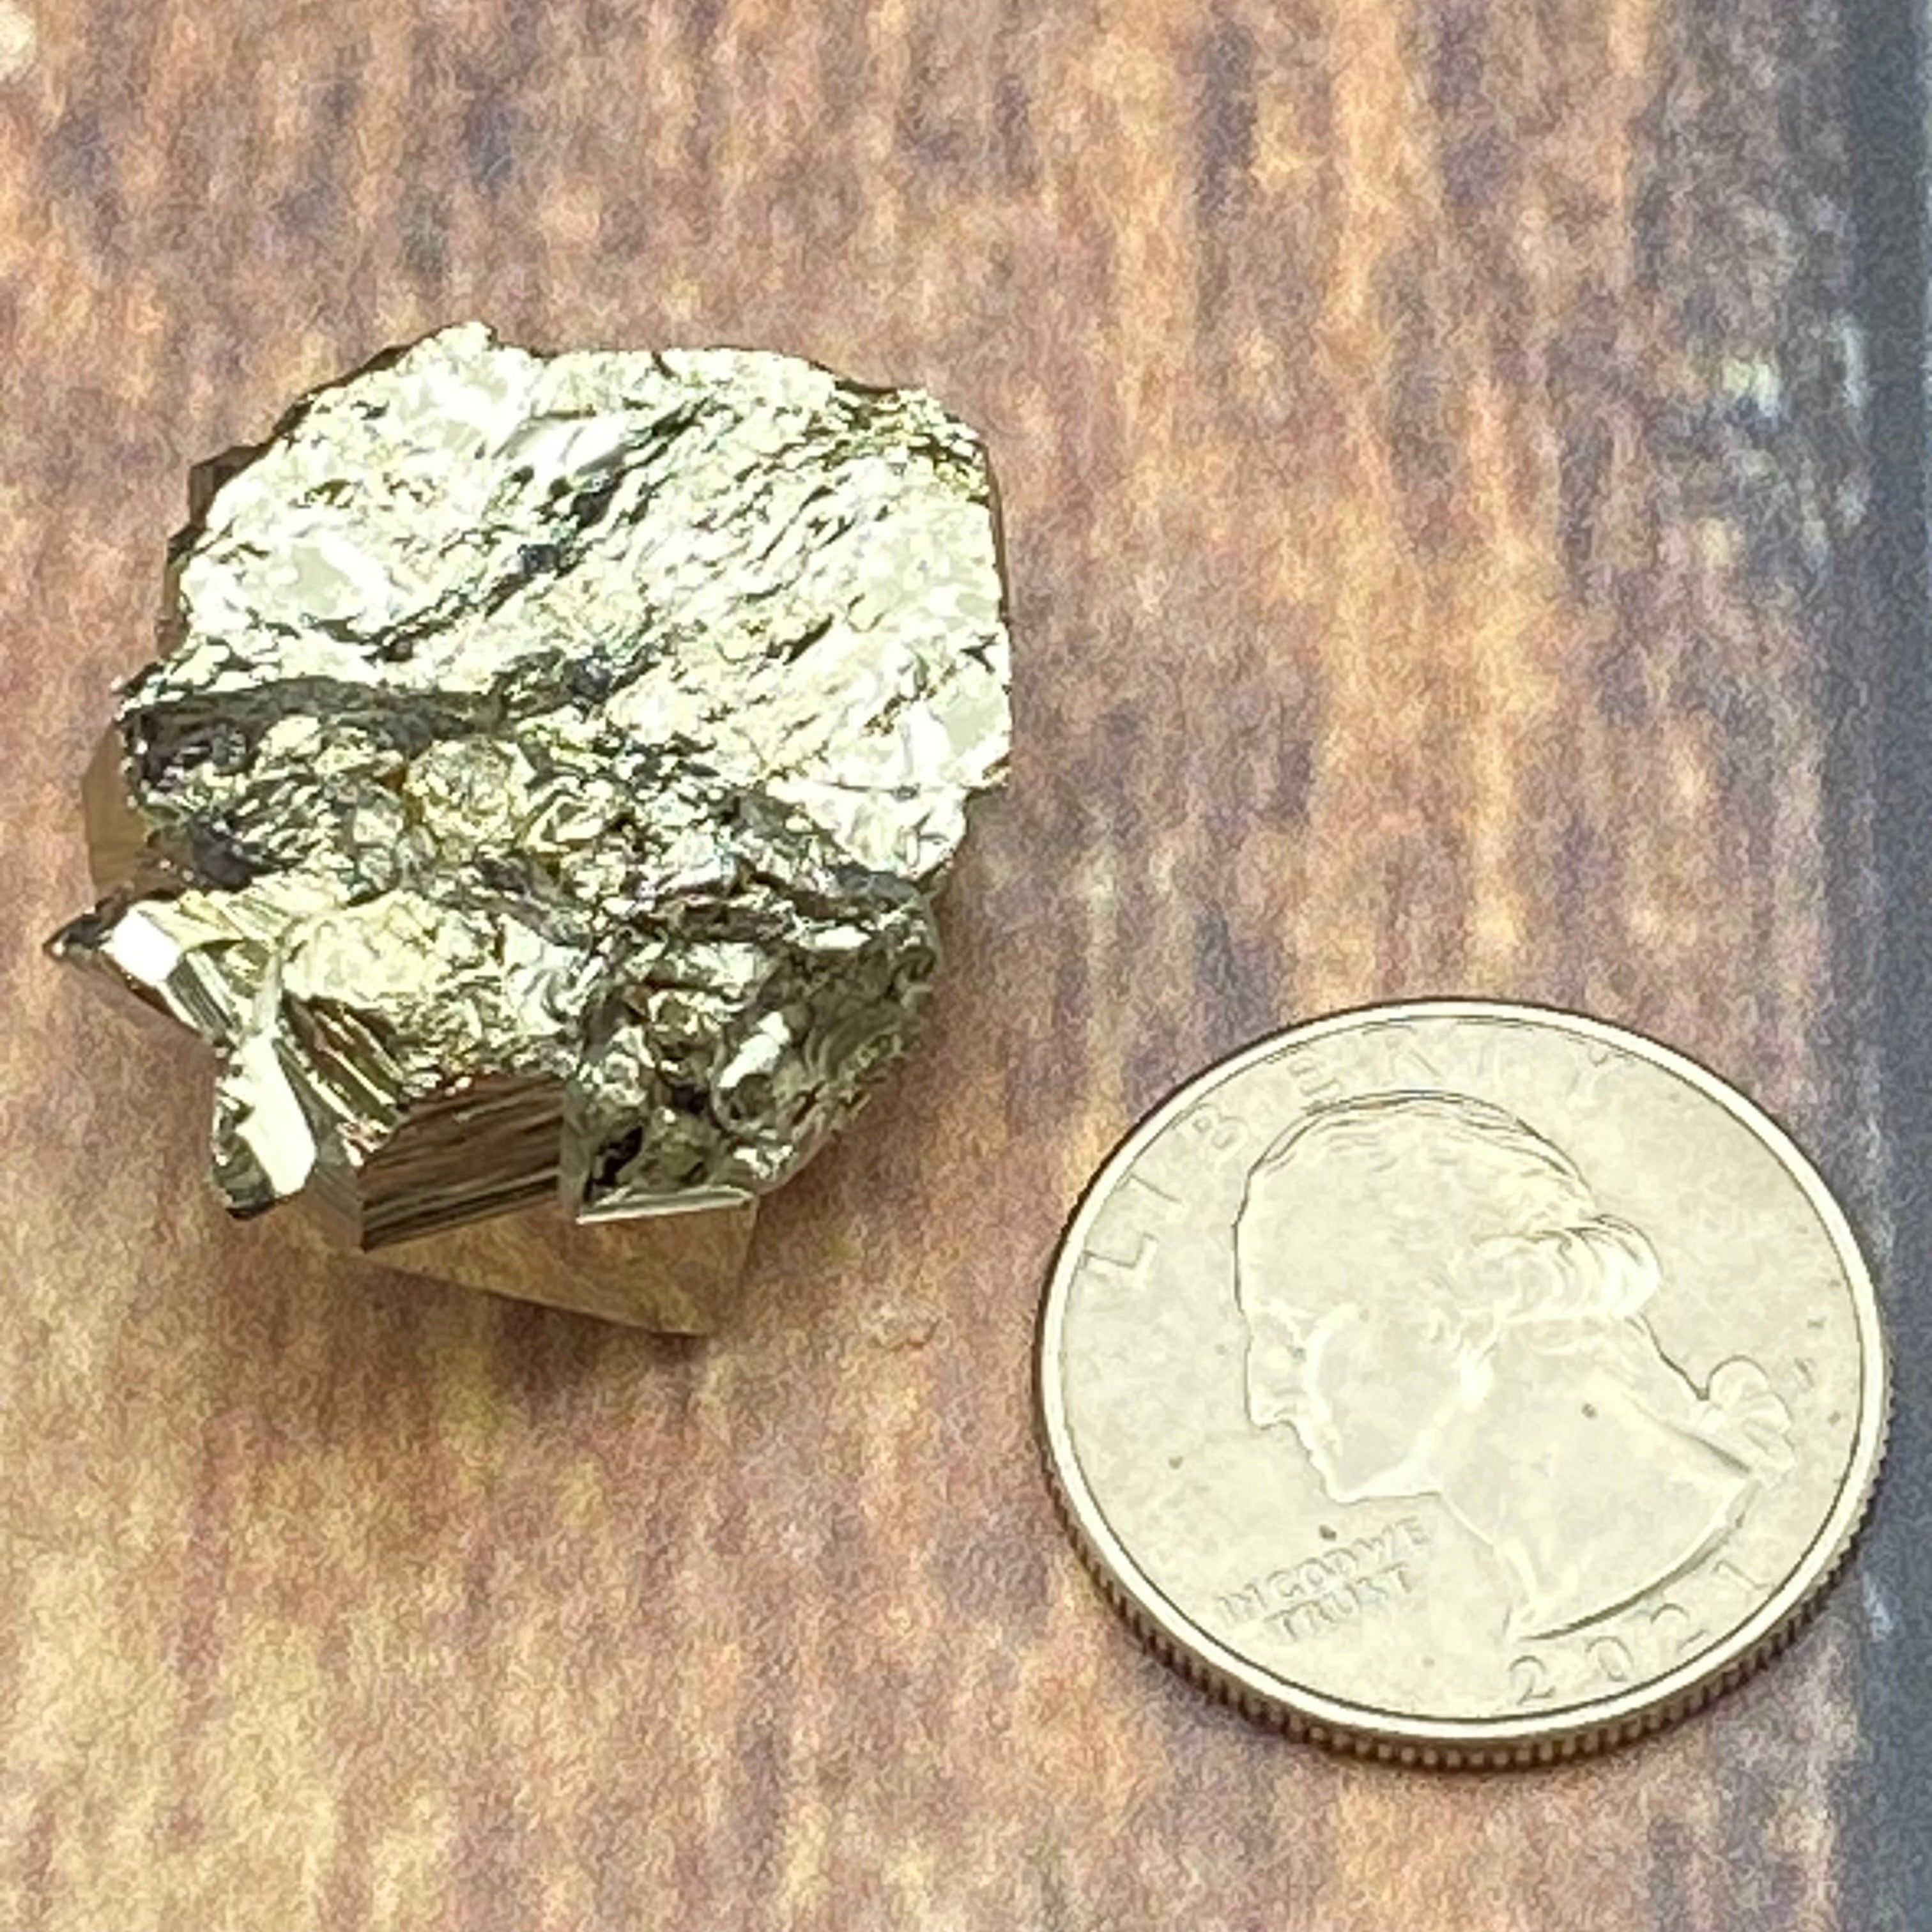 Peruvian Pyrite Crystal - 129